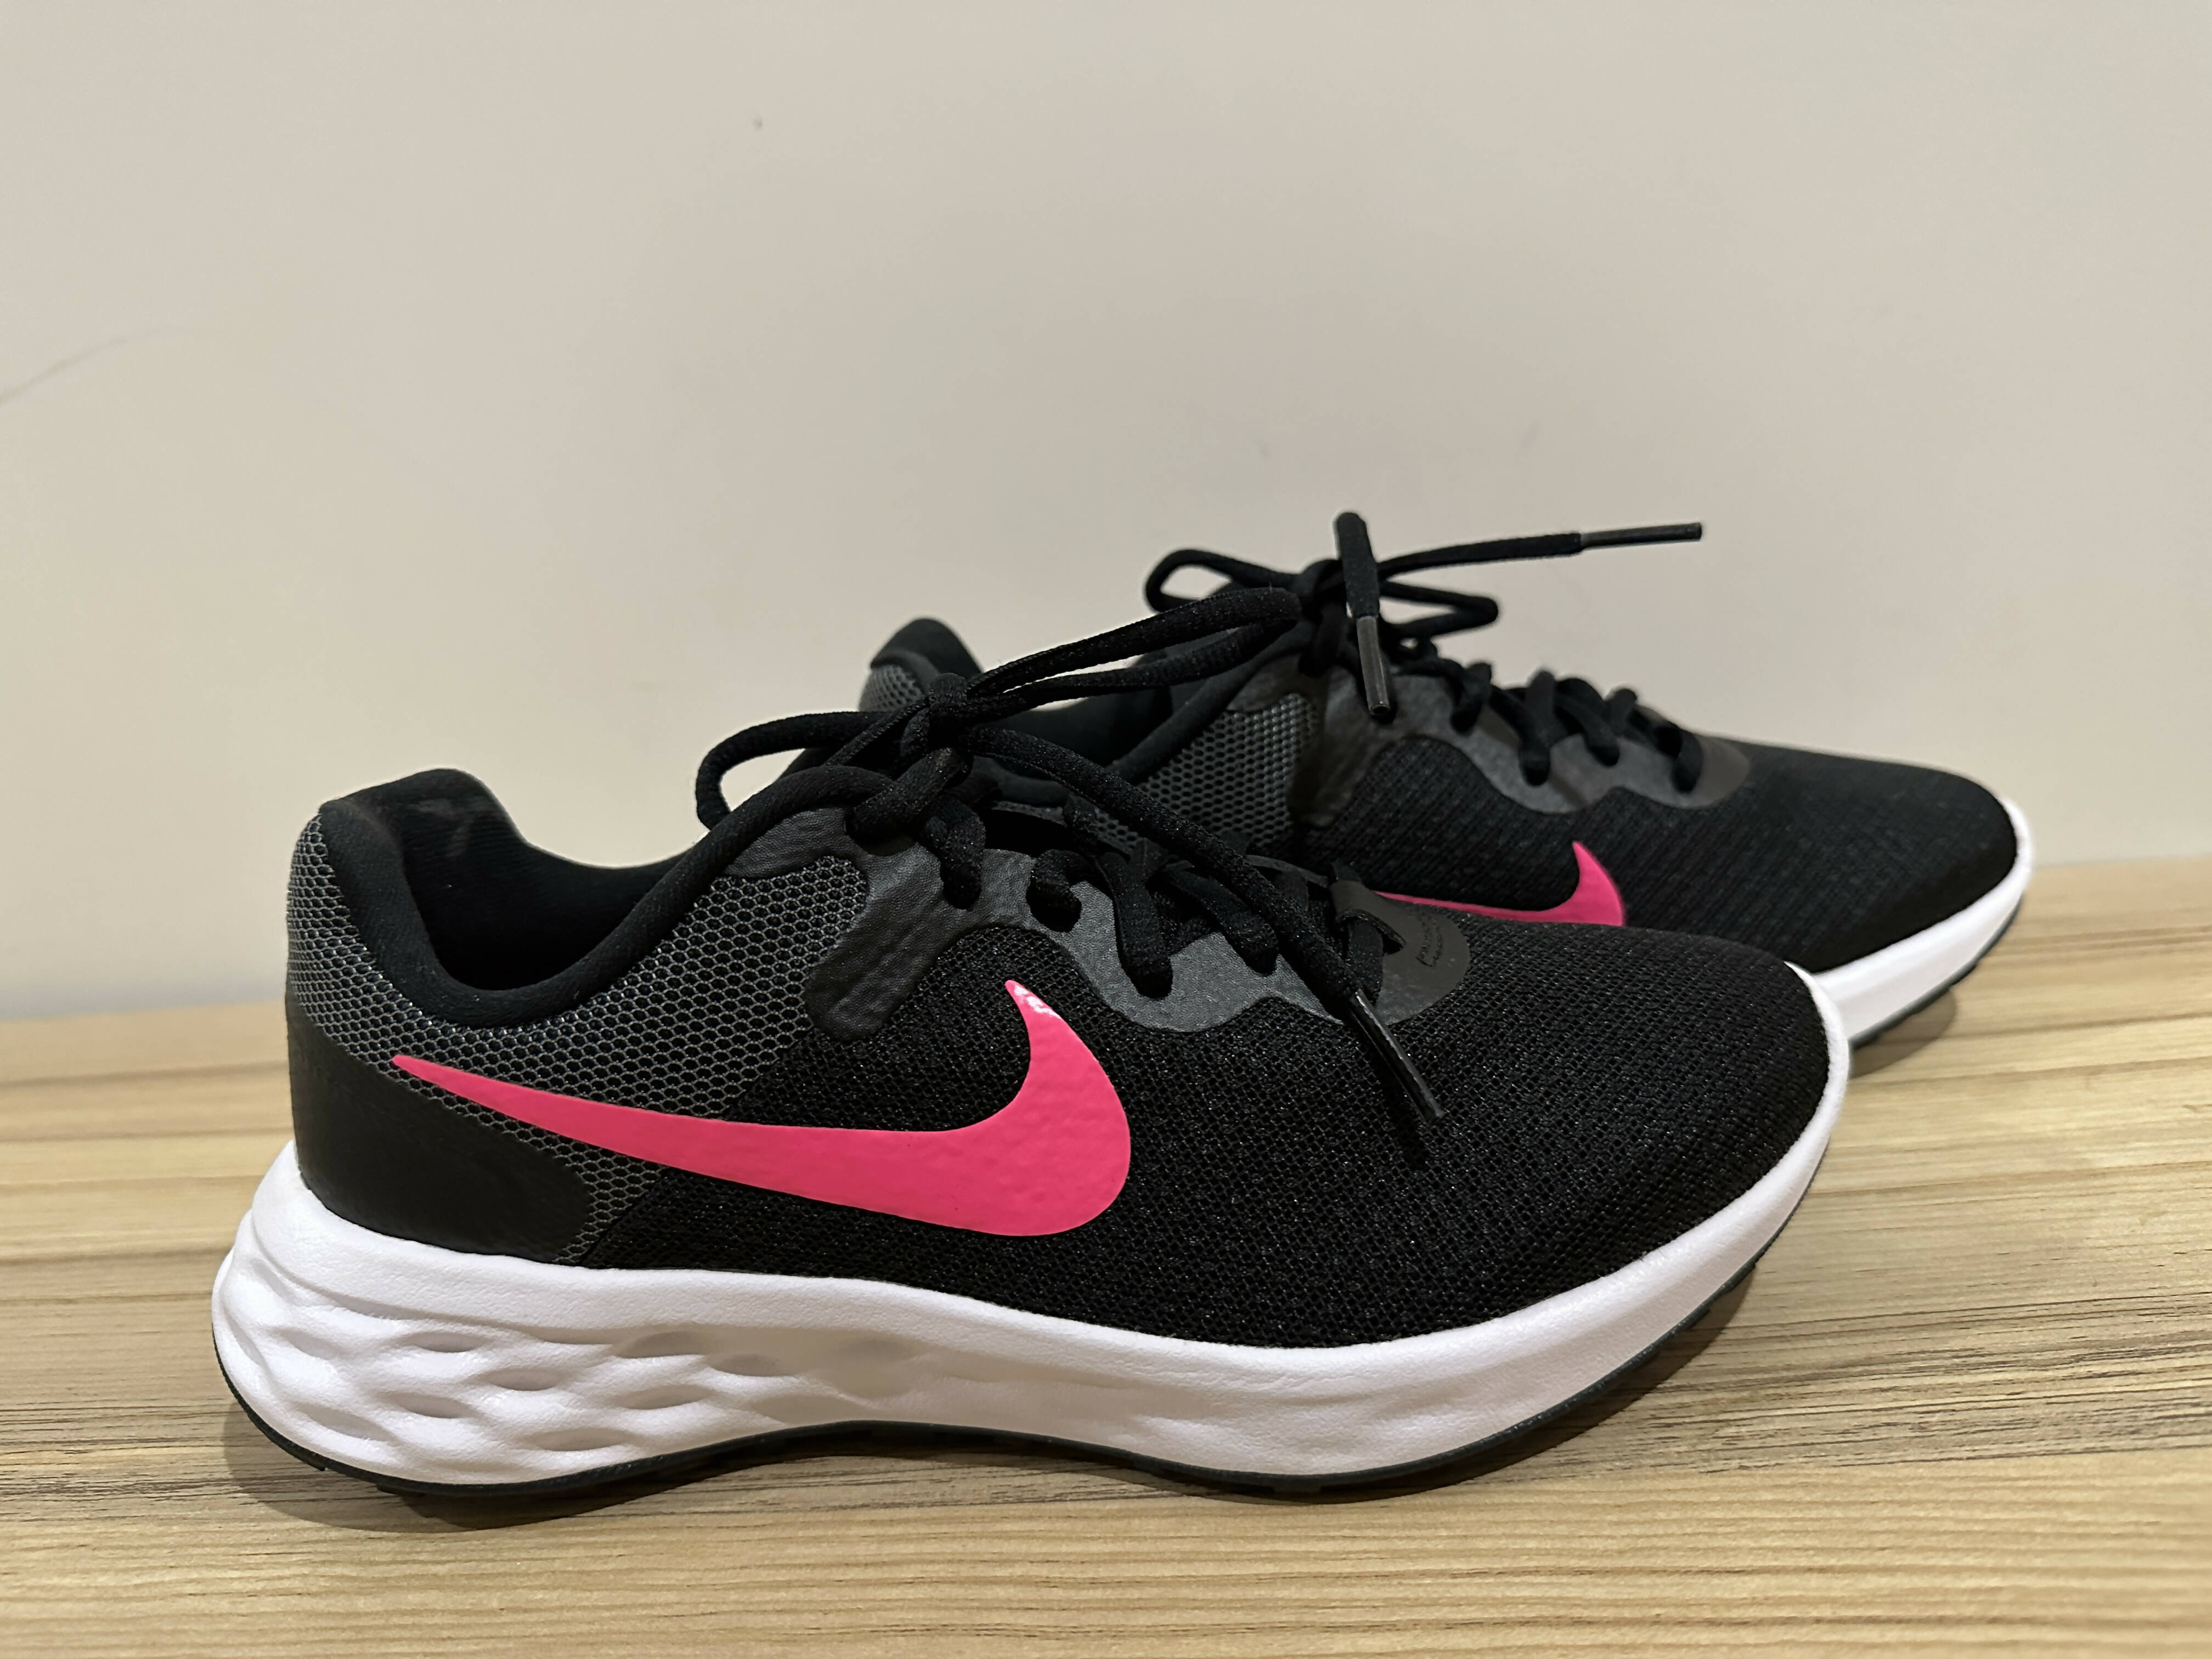 Nike | Black Shoes (Size: (3)36 ) | Women Shoes Footwear | Brand New